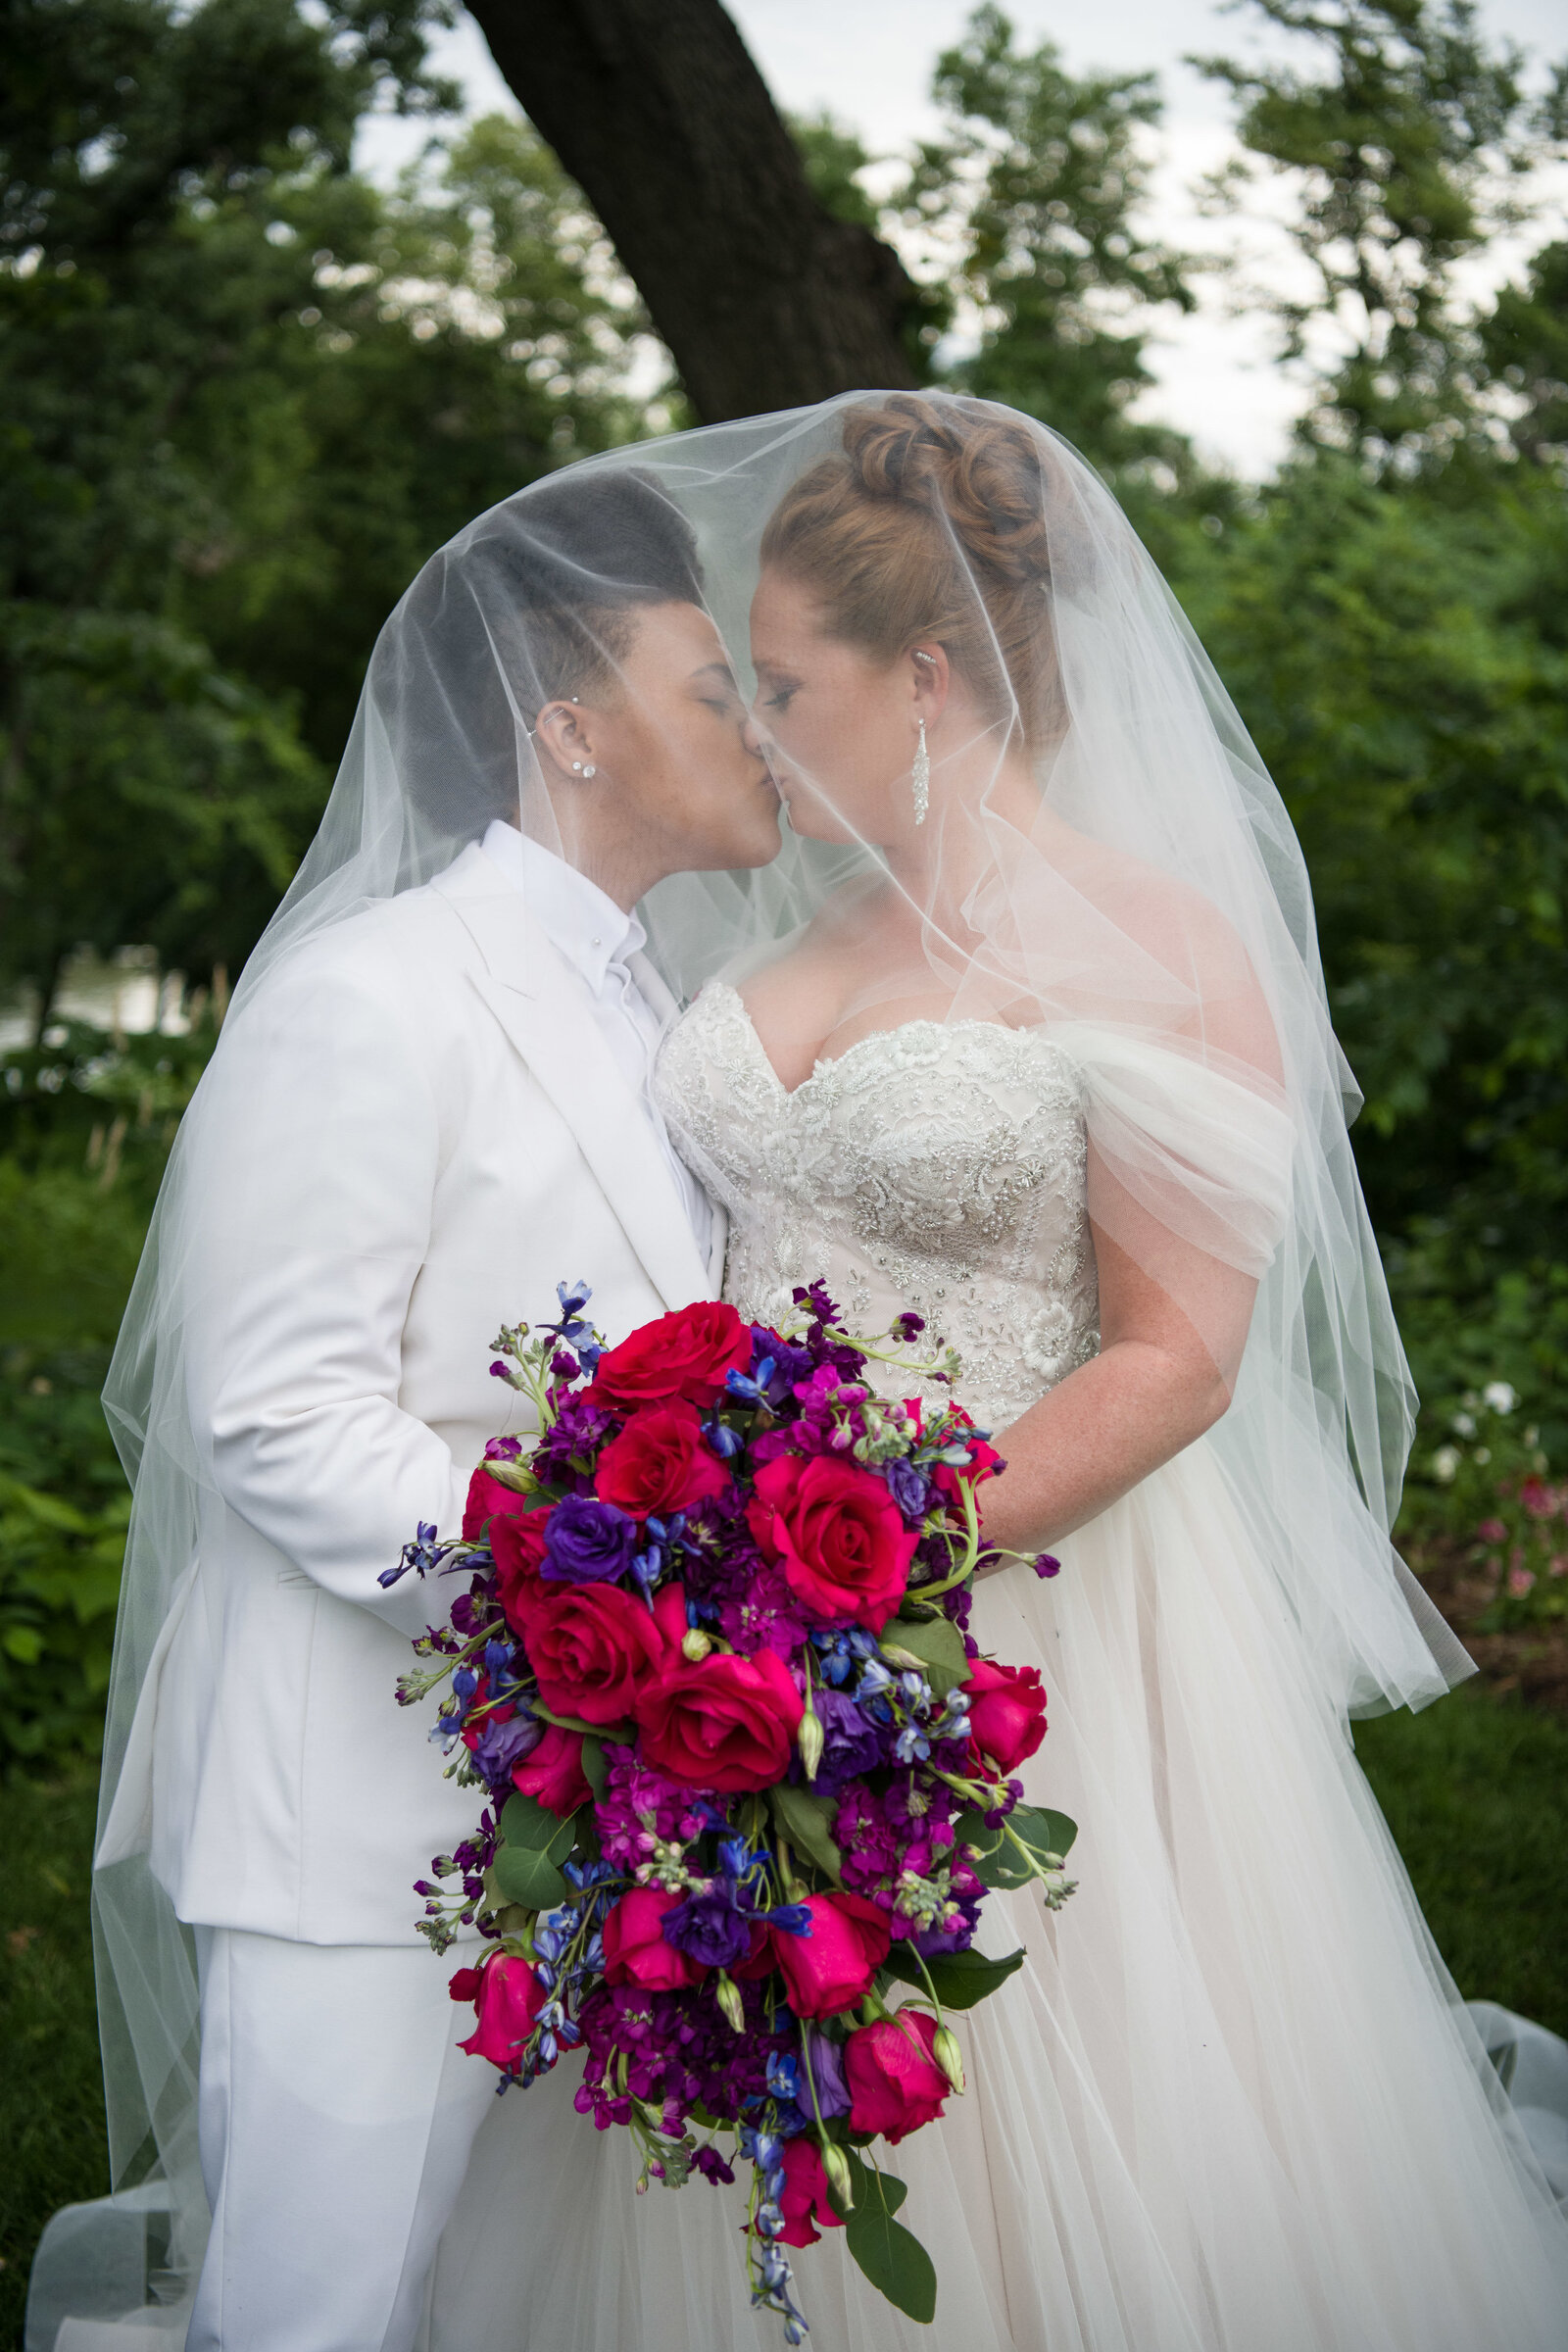 Kasey & Monique - Minnesota Wedding Photography - Leopold's Mississippi Gardens - RKH Images - Portraits  (261 of 292)